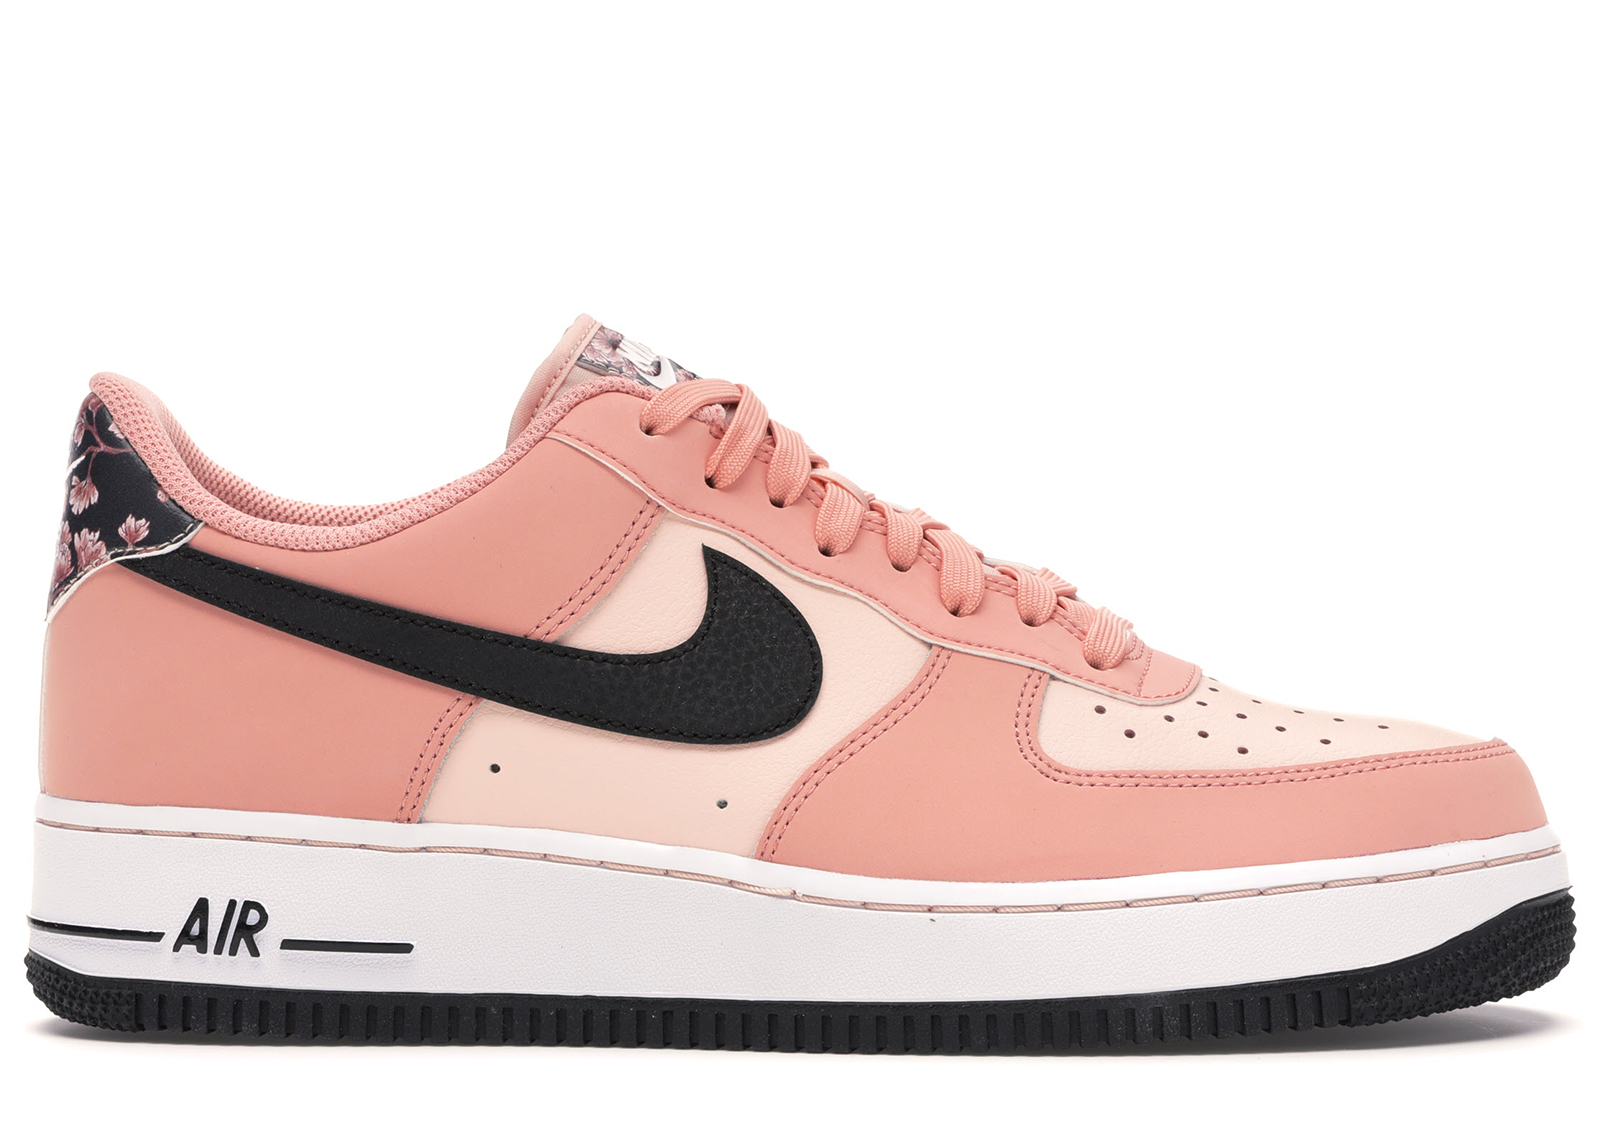 nike shoes peach color